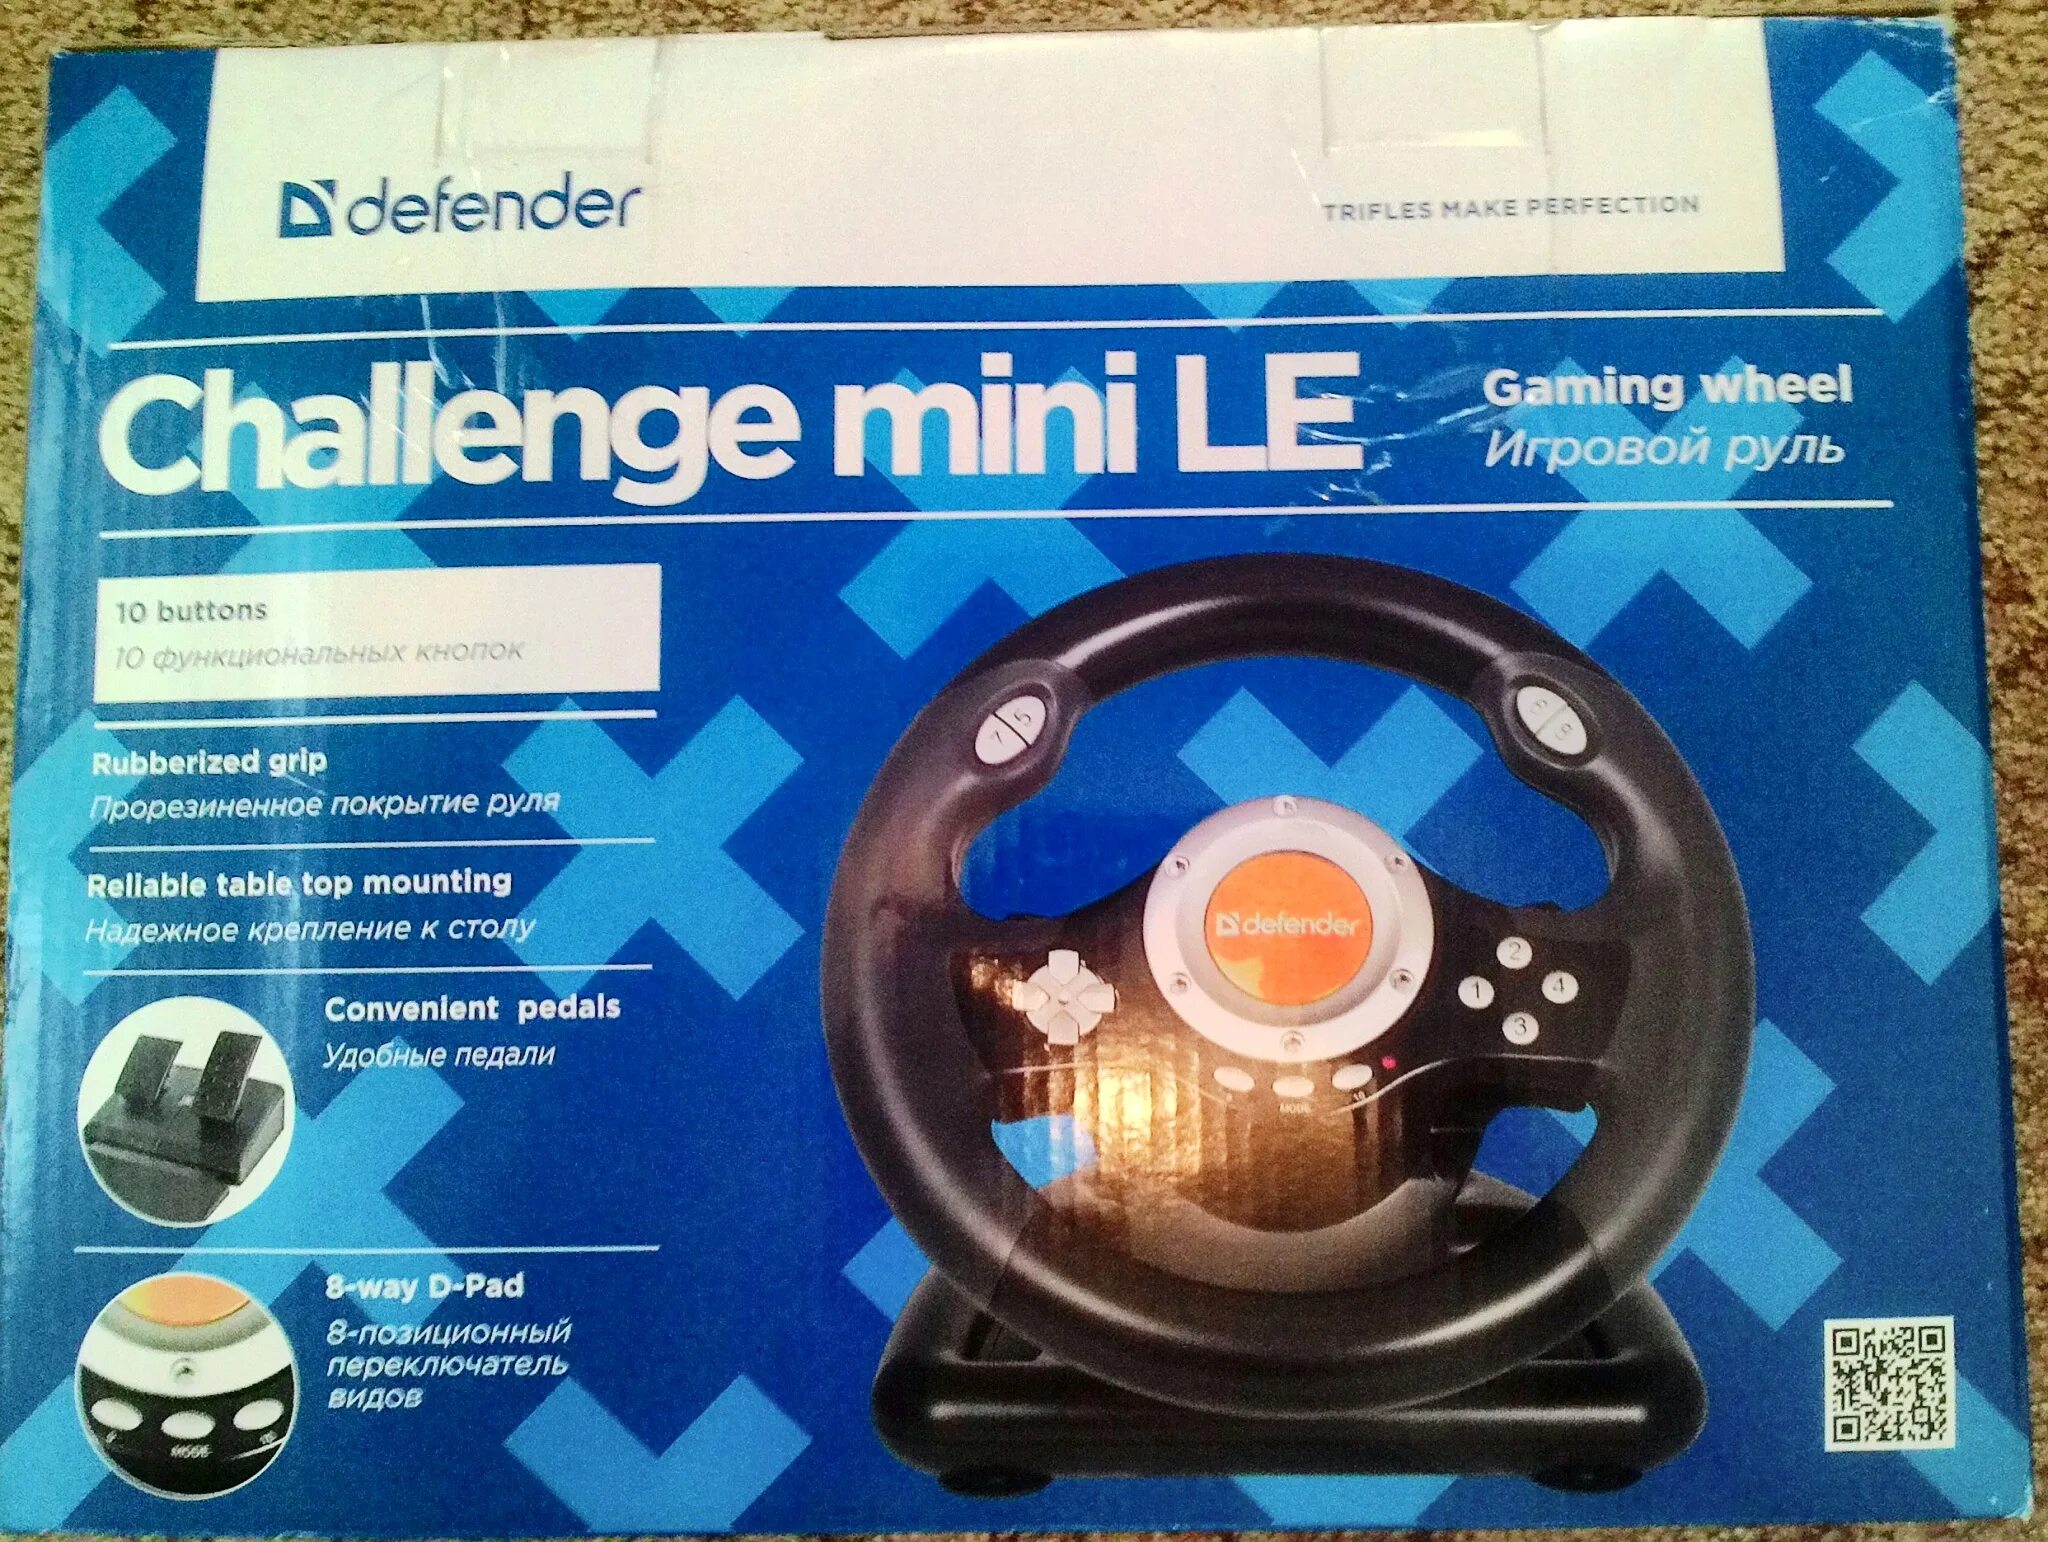 Defender Challenge Mini le 64351. Руль Дефендер Racing Wheel. Руль Defender Challenge Mini. Игровой руль Defender Challenge Mini le. Как подключить руль defender